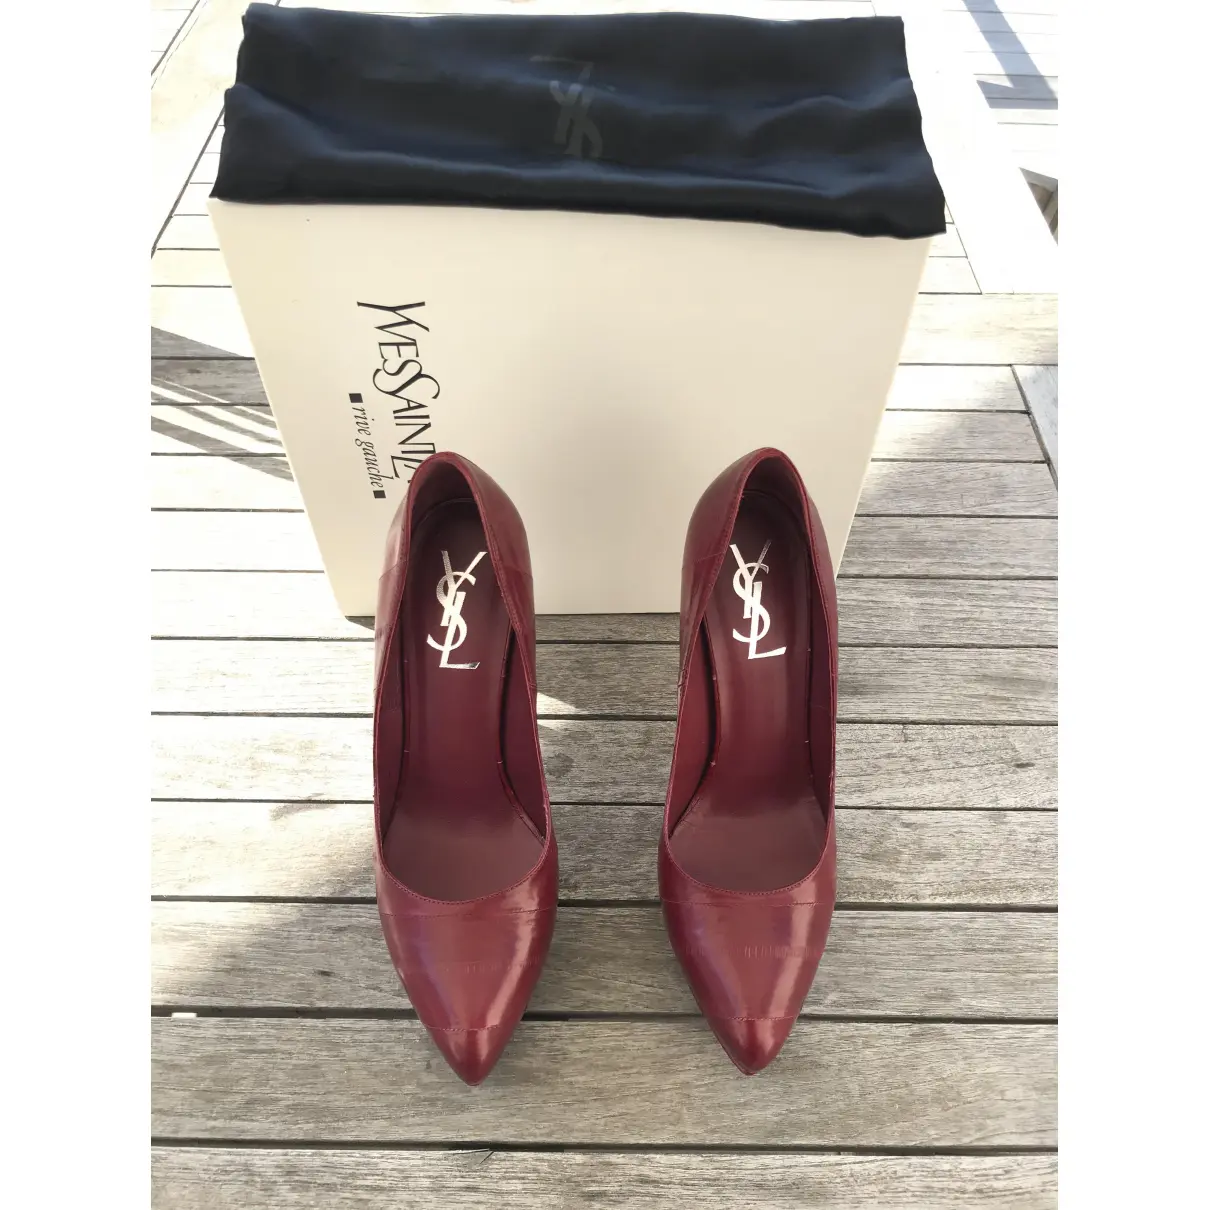 Buy Yves Saint Laurent Leather heels online